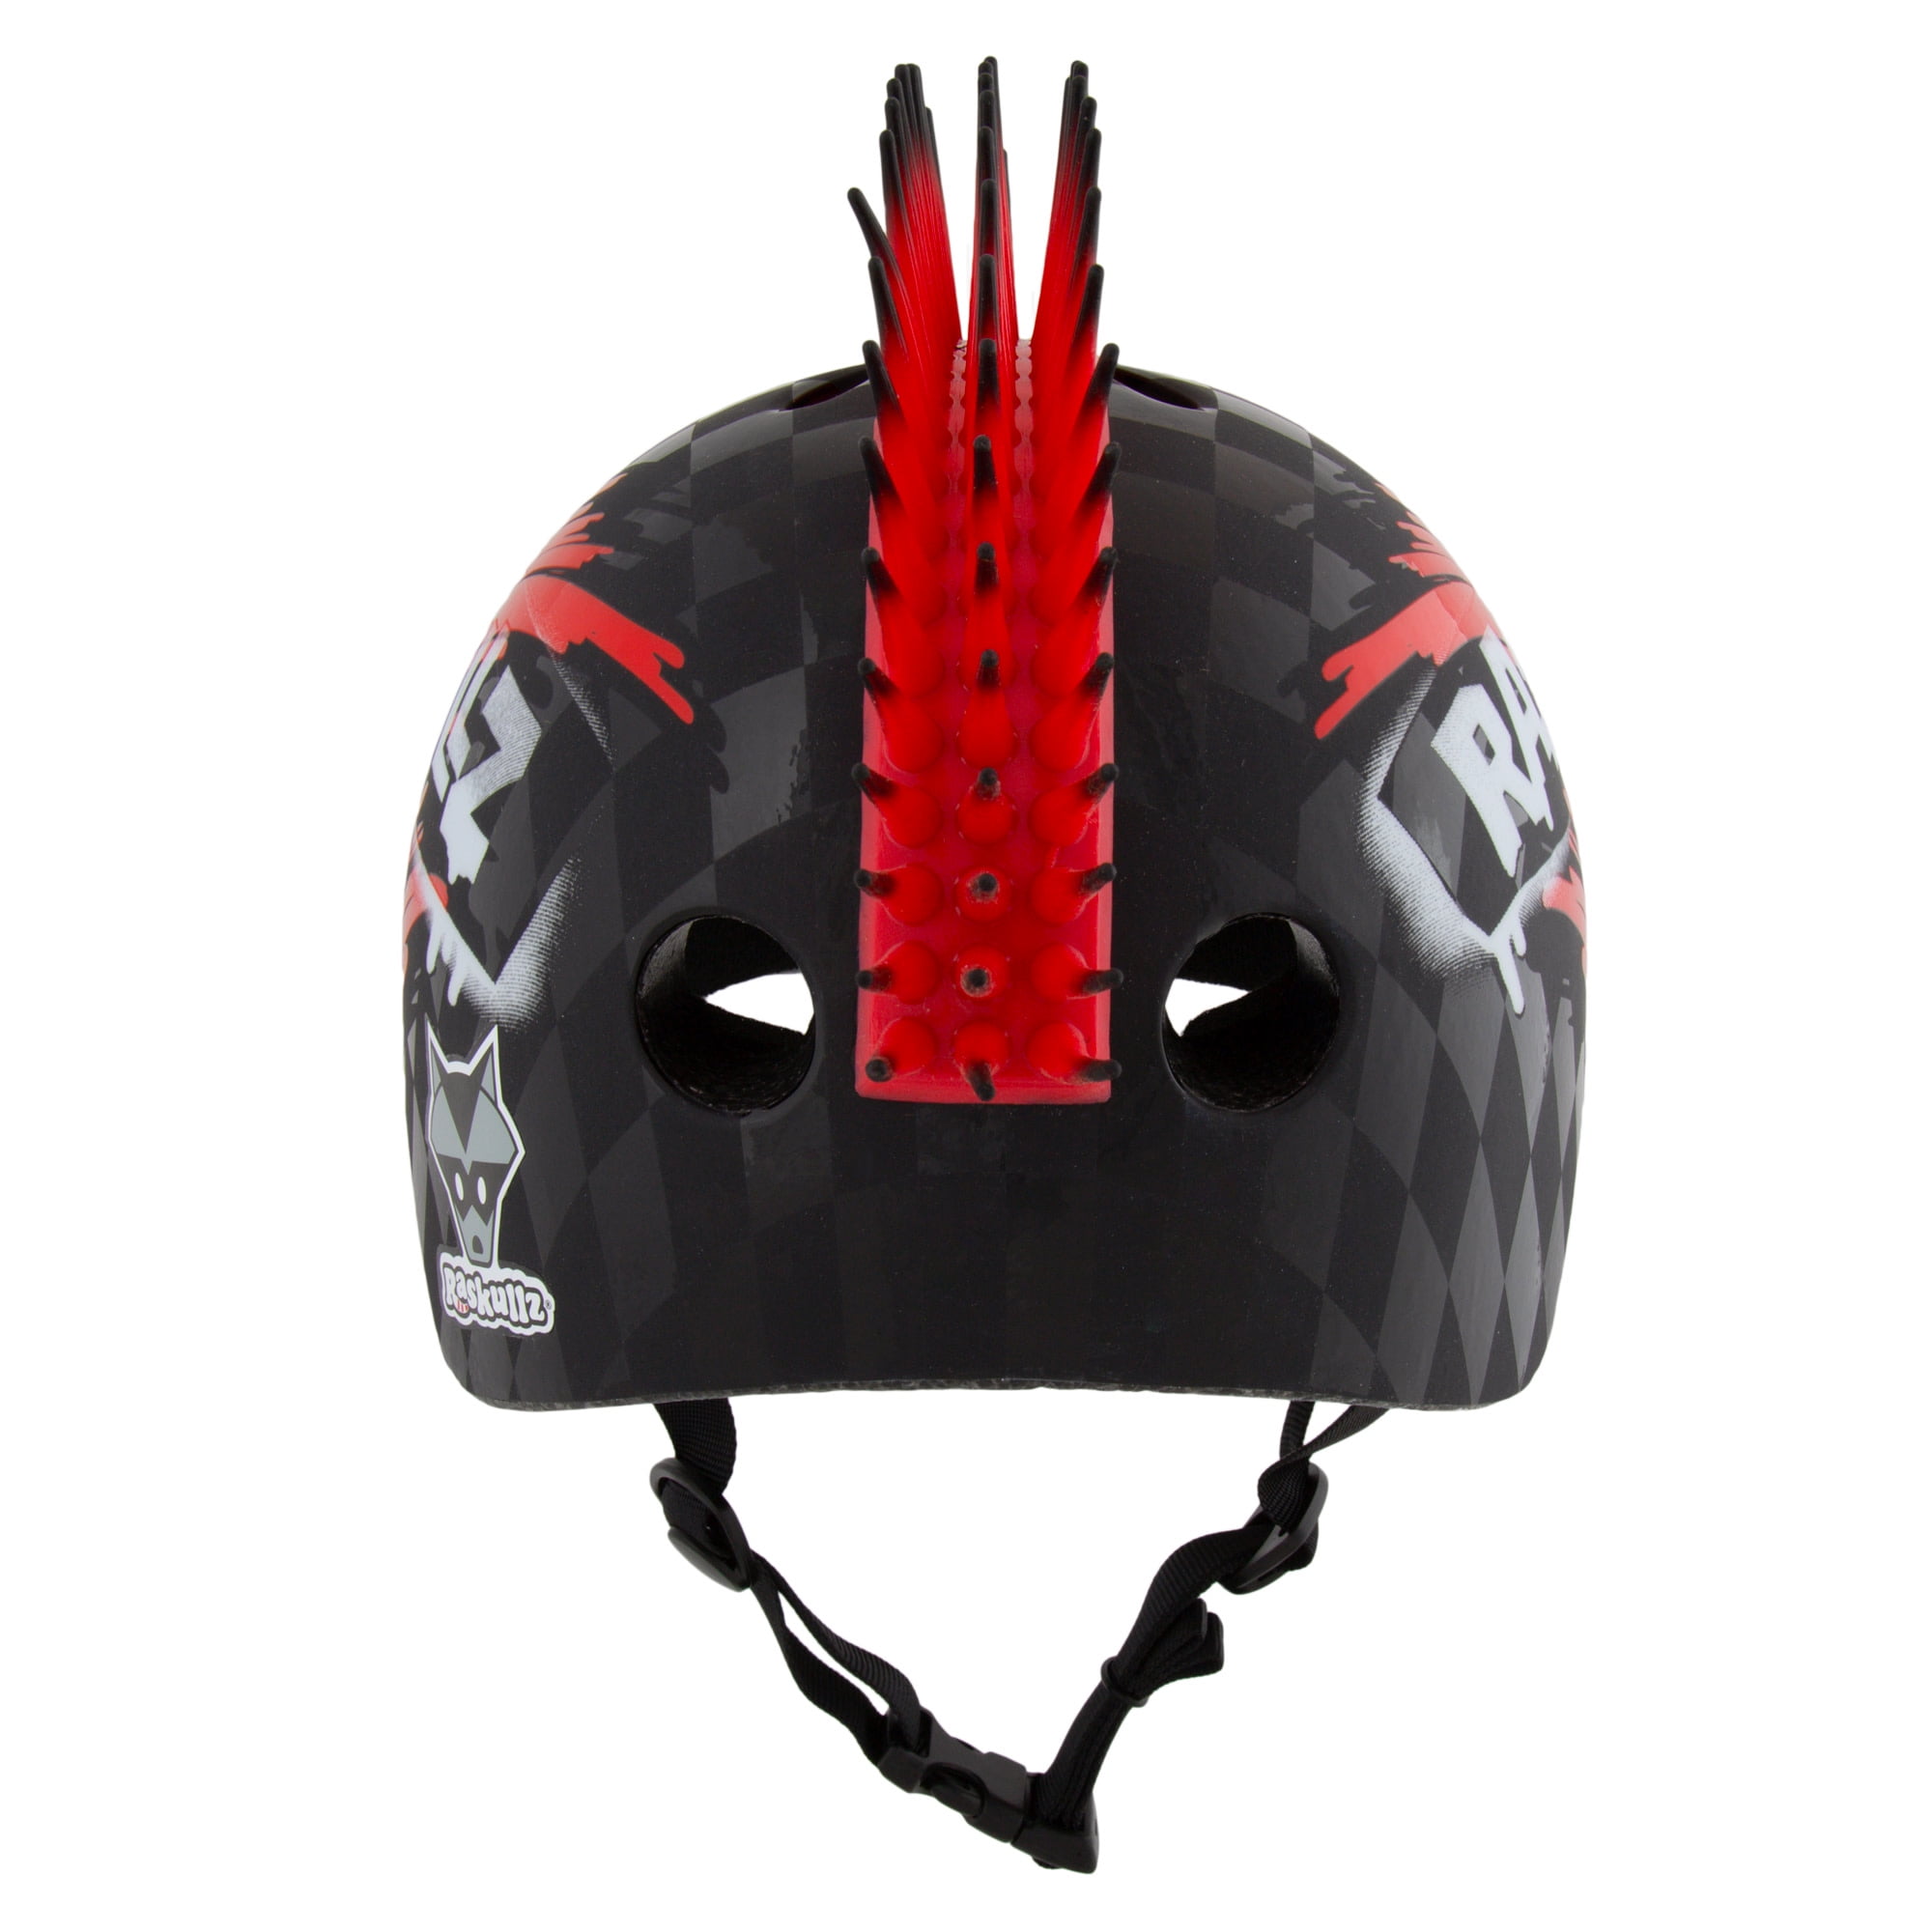 Raskullz 81 Red Hawkins 5t Hawk Helmet Black Ages 5 for sale online